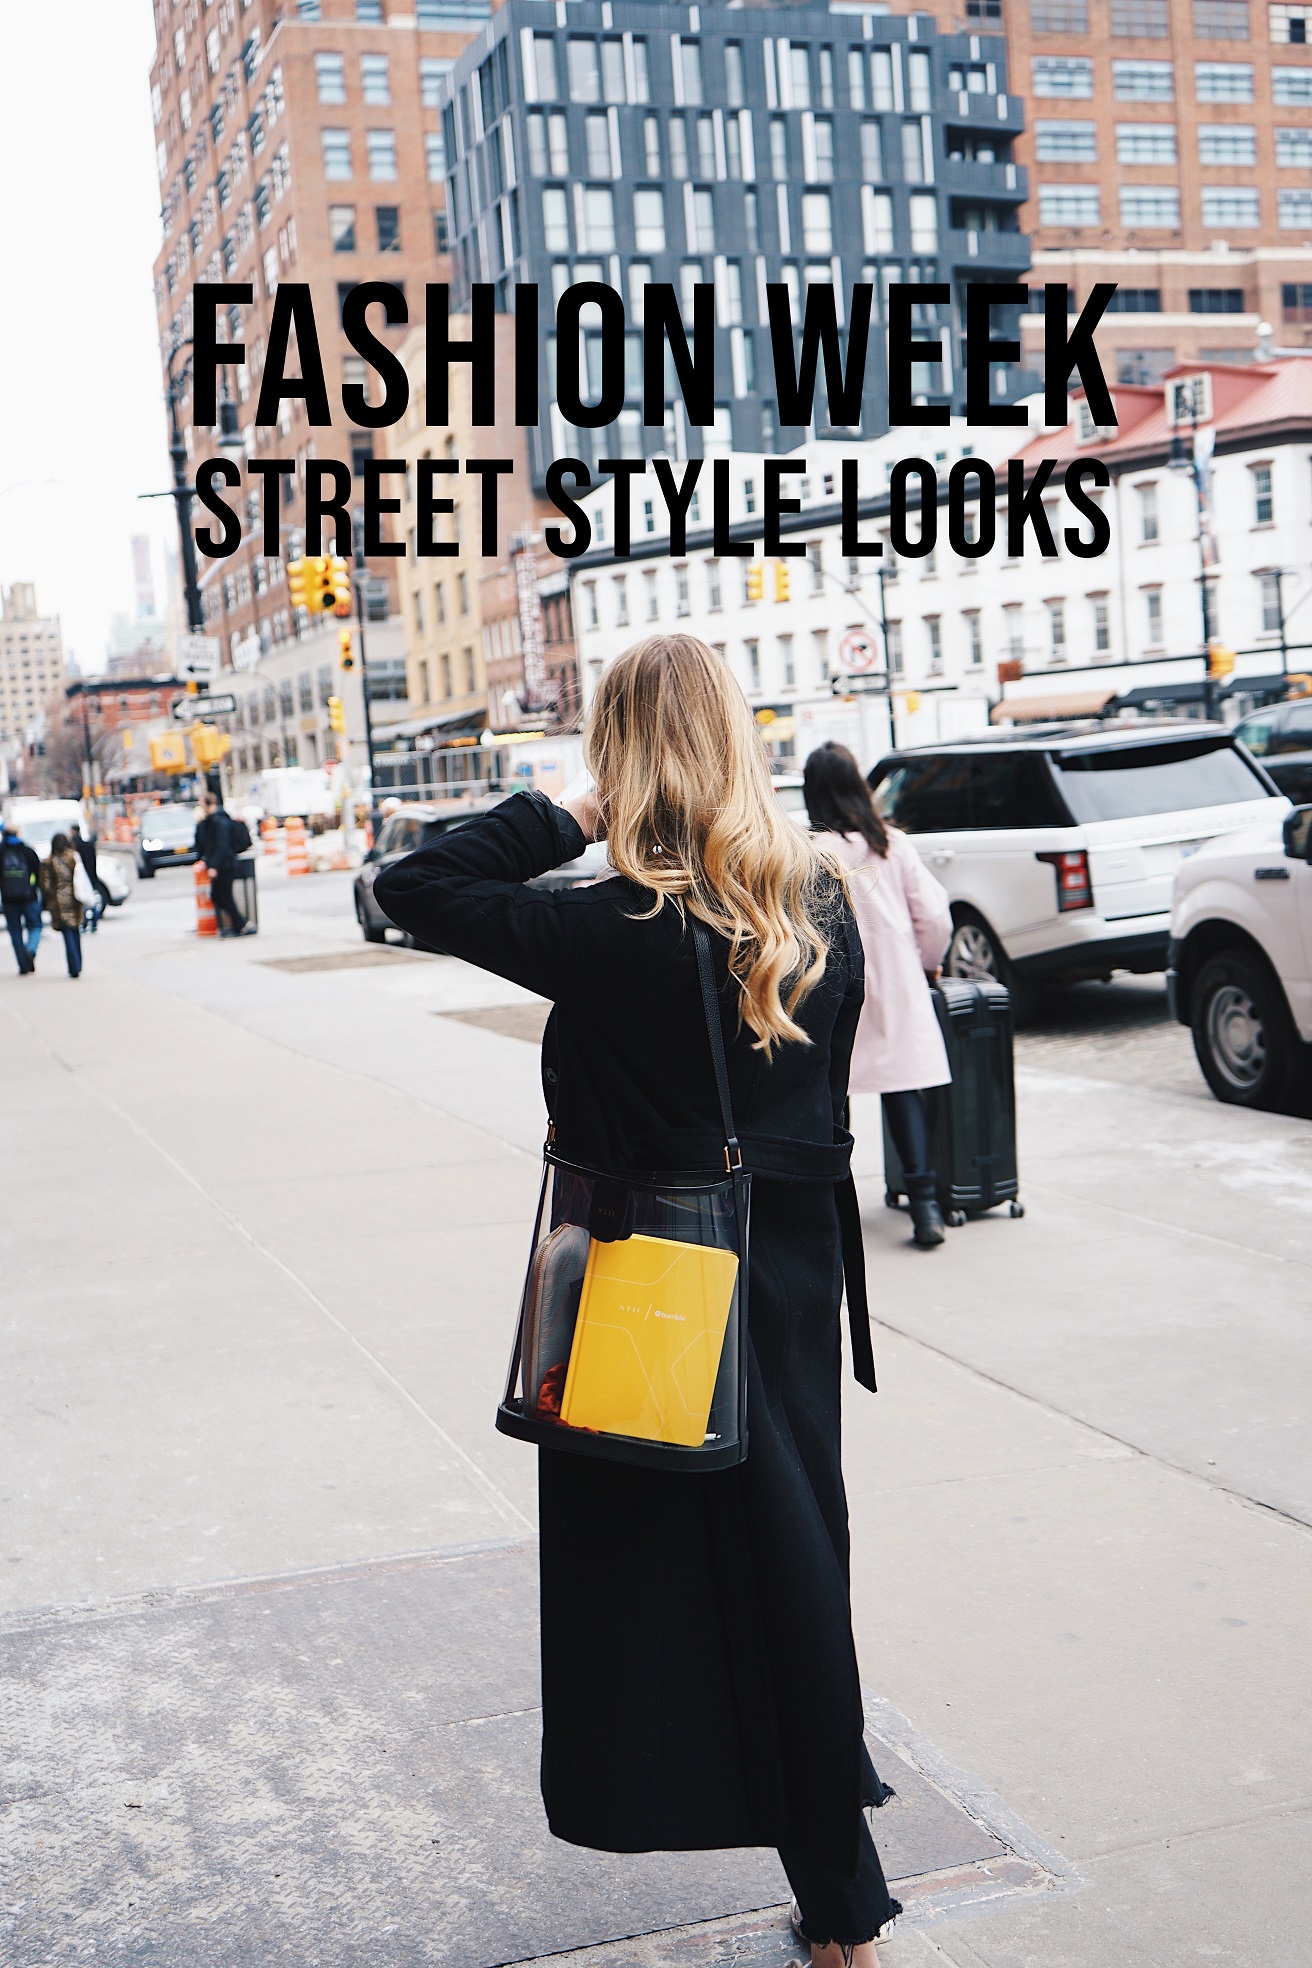 Street Style Fashion 2019 - The Fashion Folks